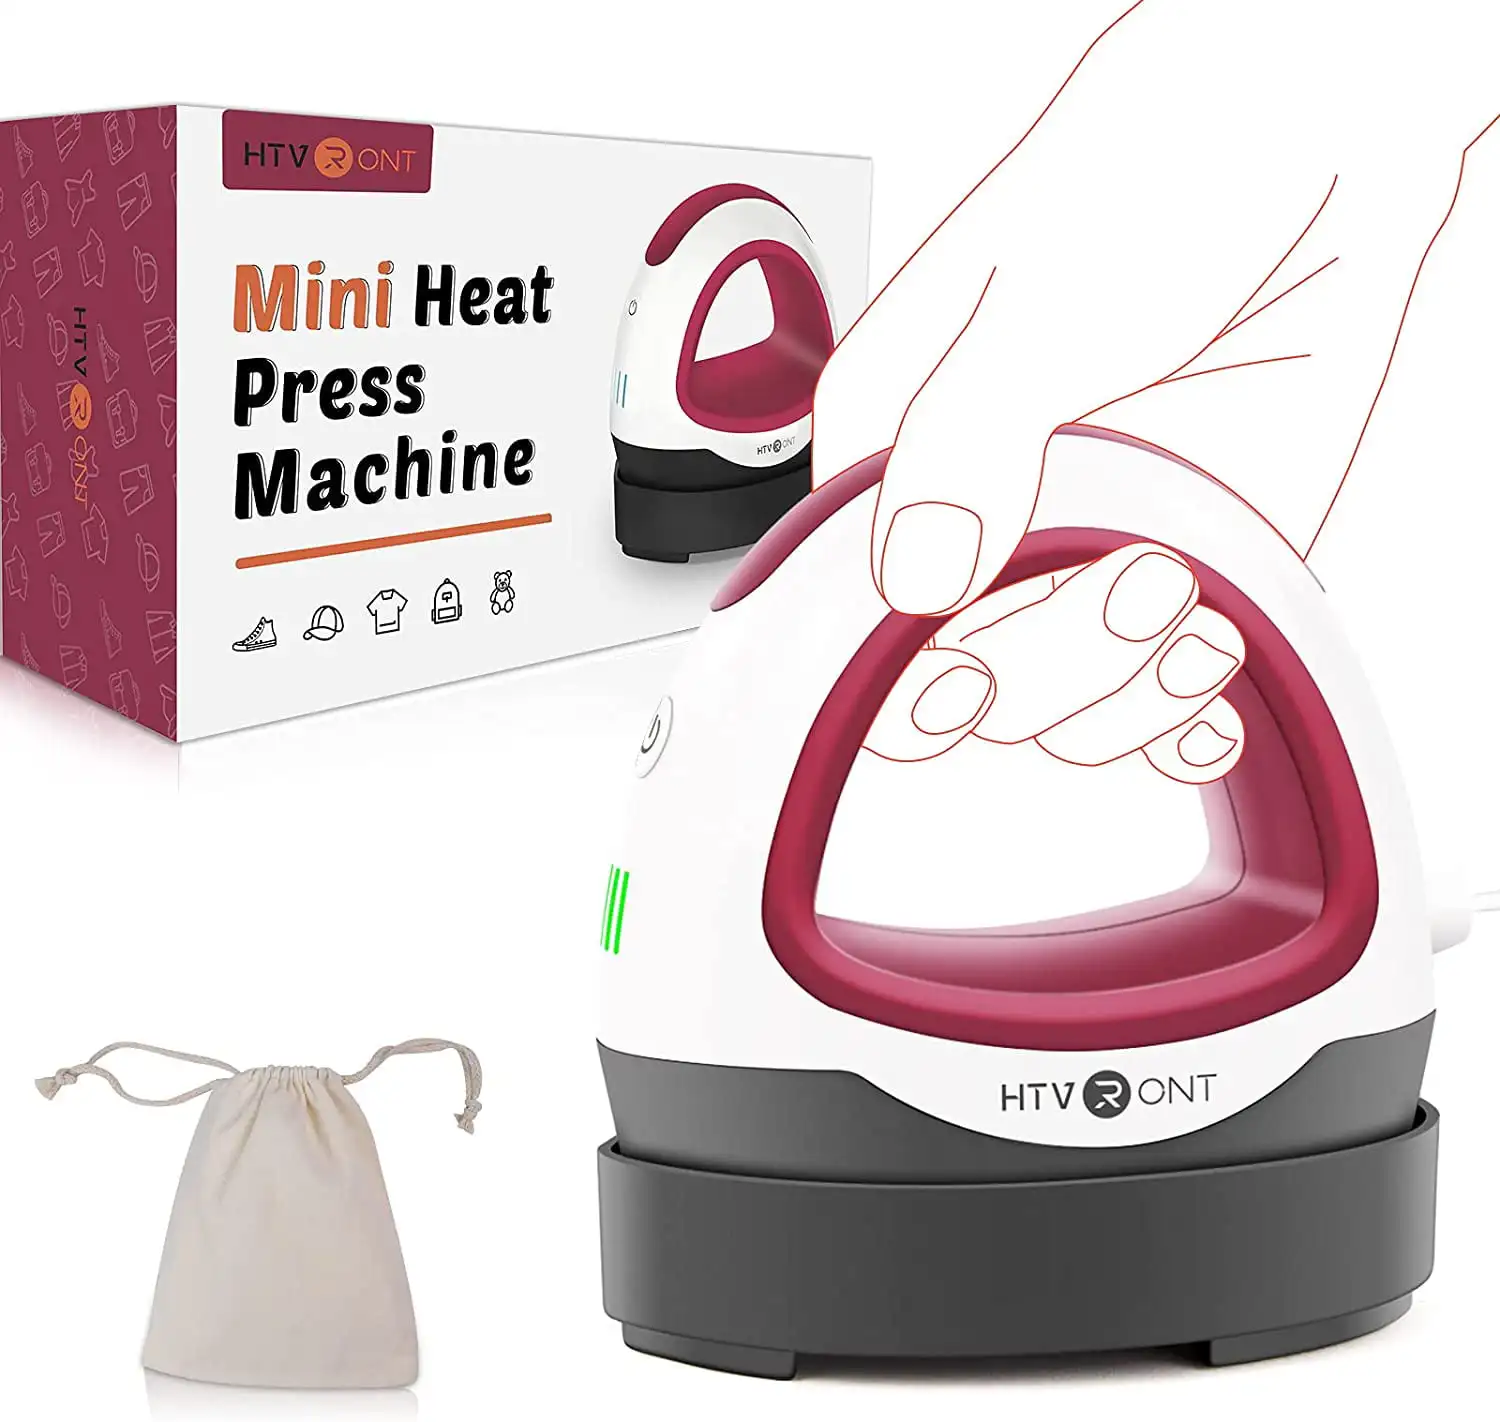 Mini Heat Press Machine Portable Press Machine Iron Press for T-Shirt Clothes Hat Bags